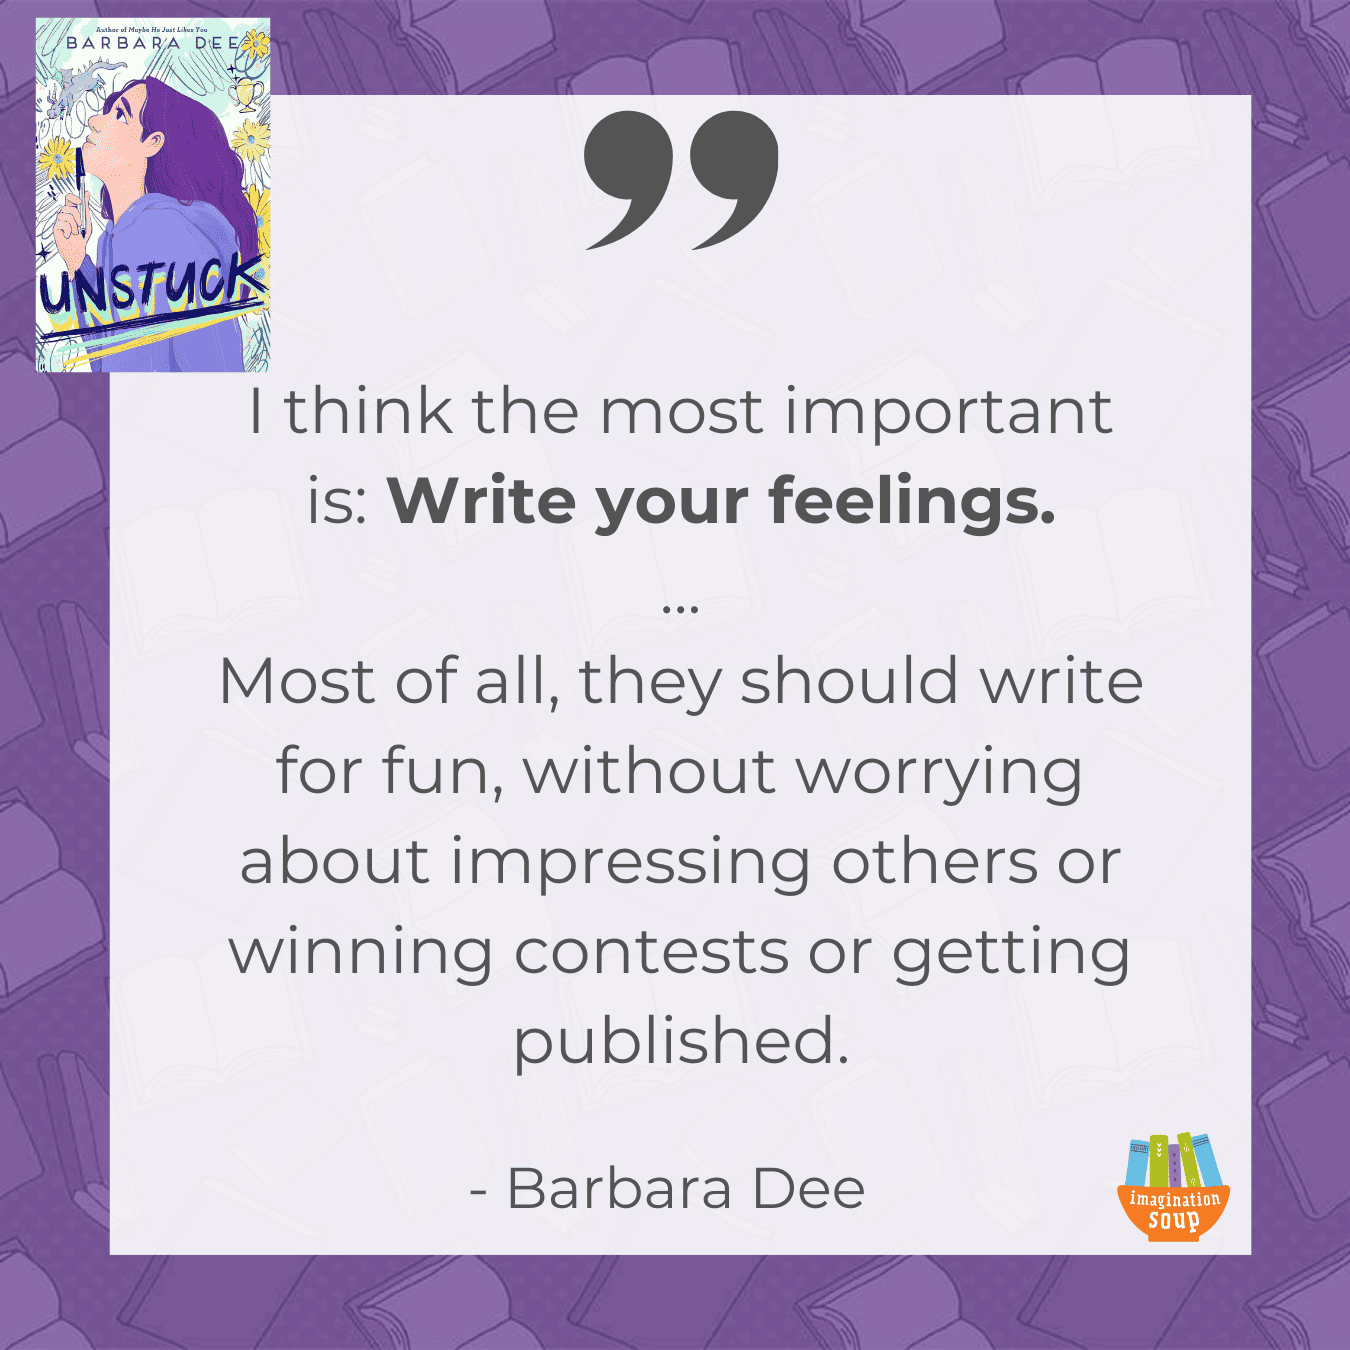 Barbara Dee advice to young writers